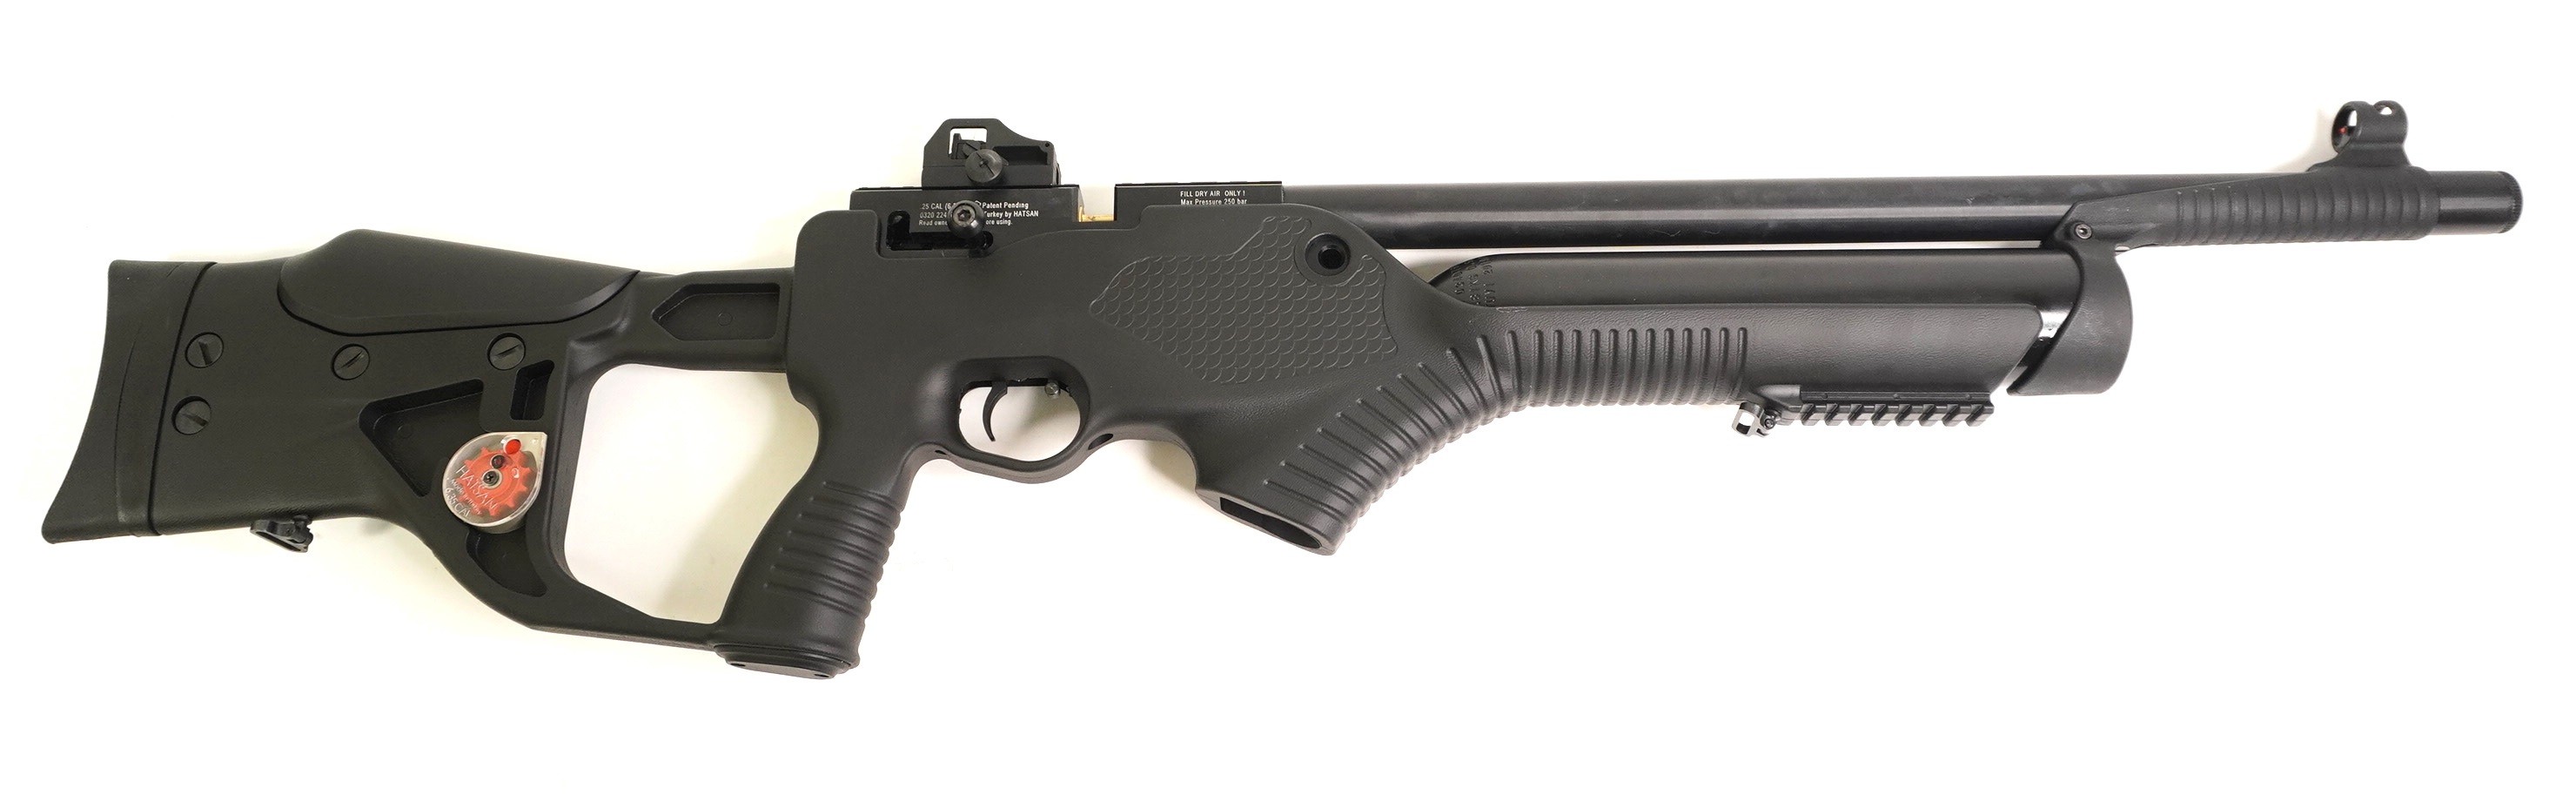 Пневматическая винтовка Hatsan Barrage (PCP, 3 Дж, п/автомат) 6,35 мм